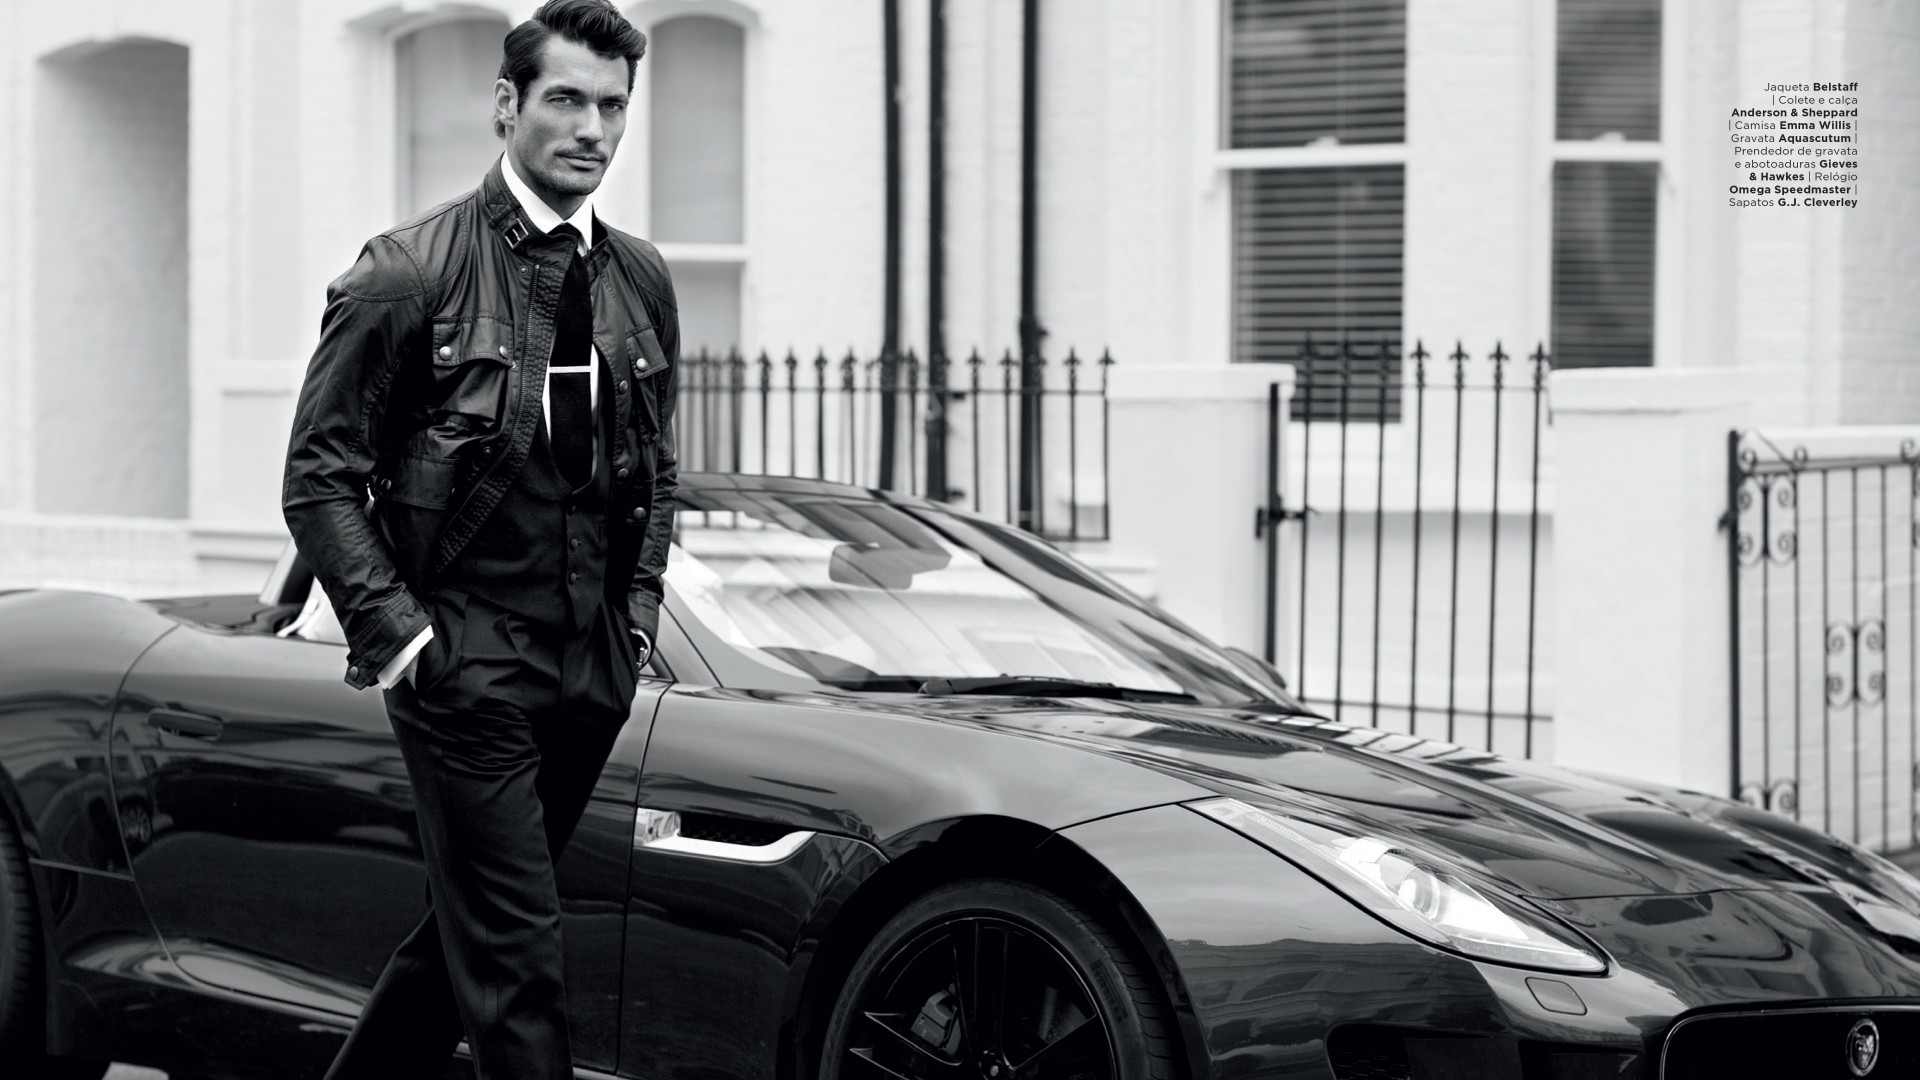 David Gandy, Top Fashion Models 2015, model, London, UK, car, street (horizontal)